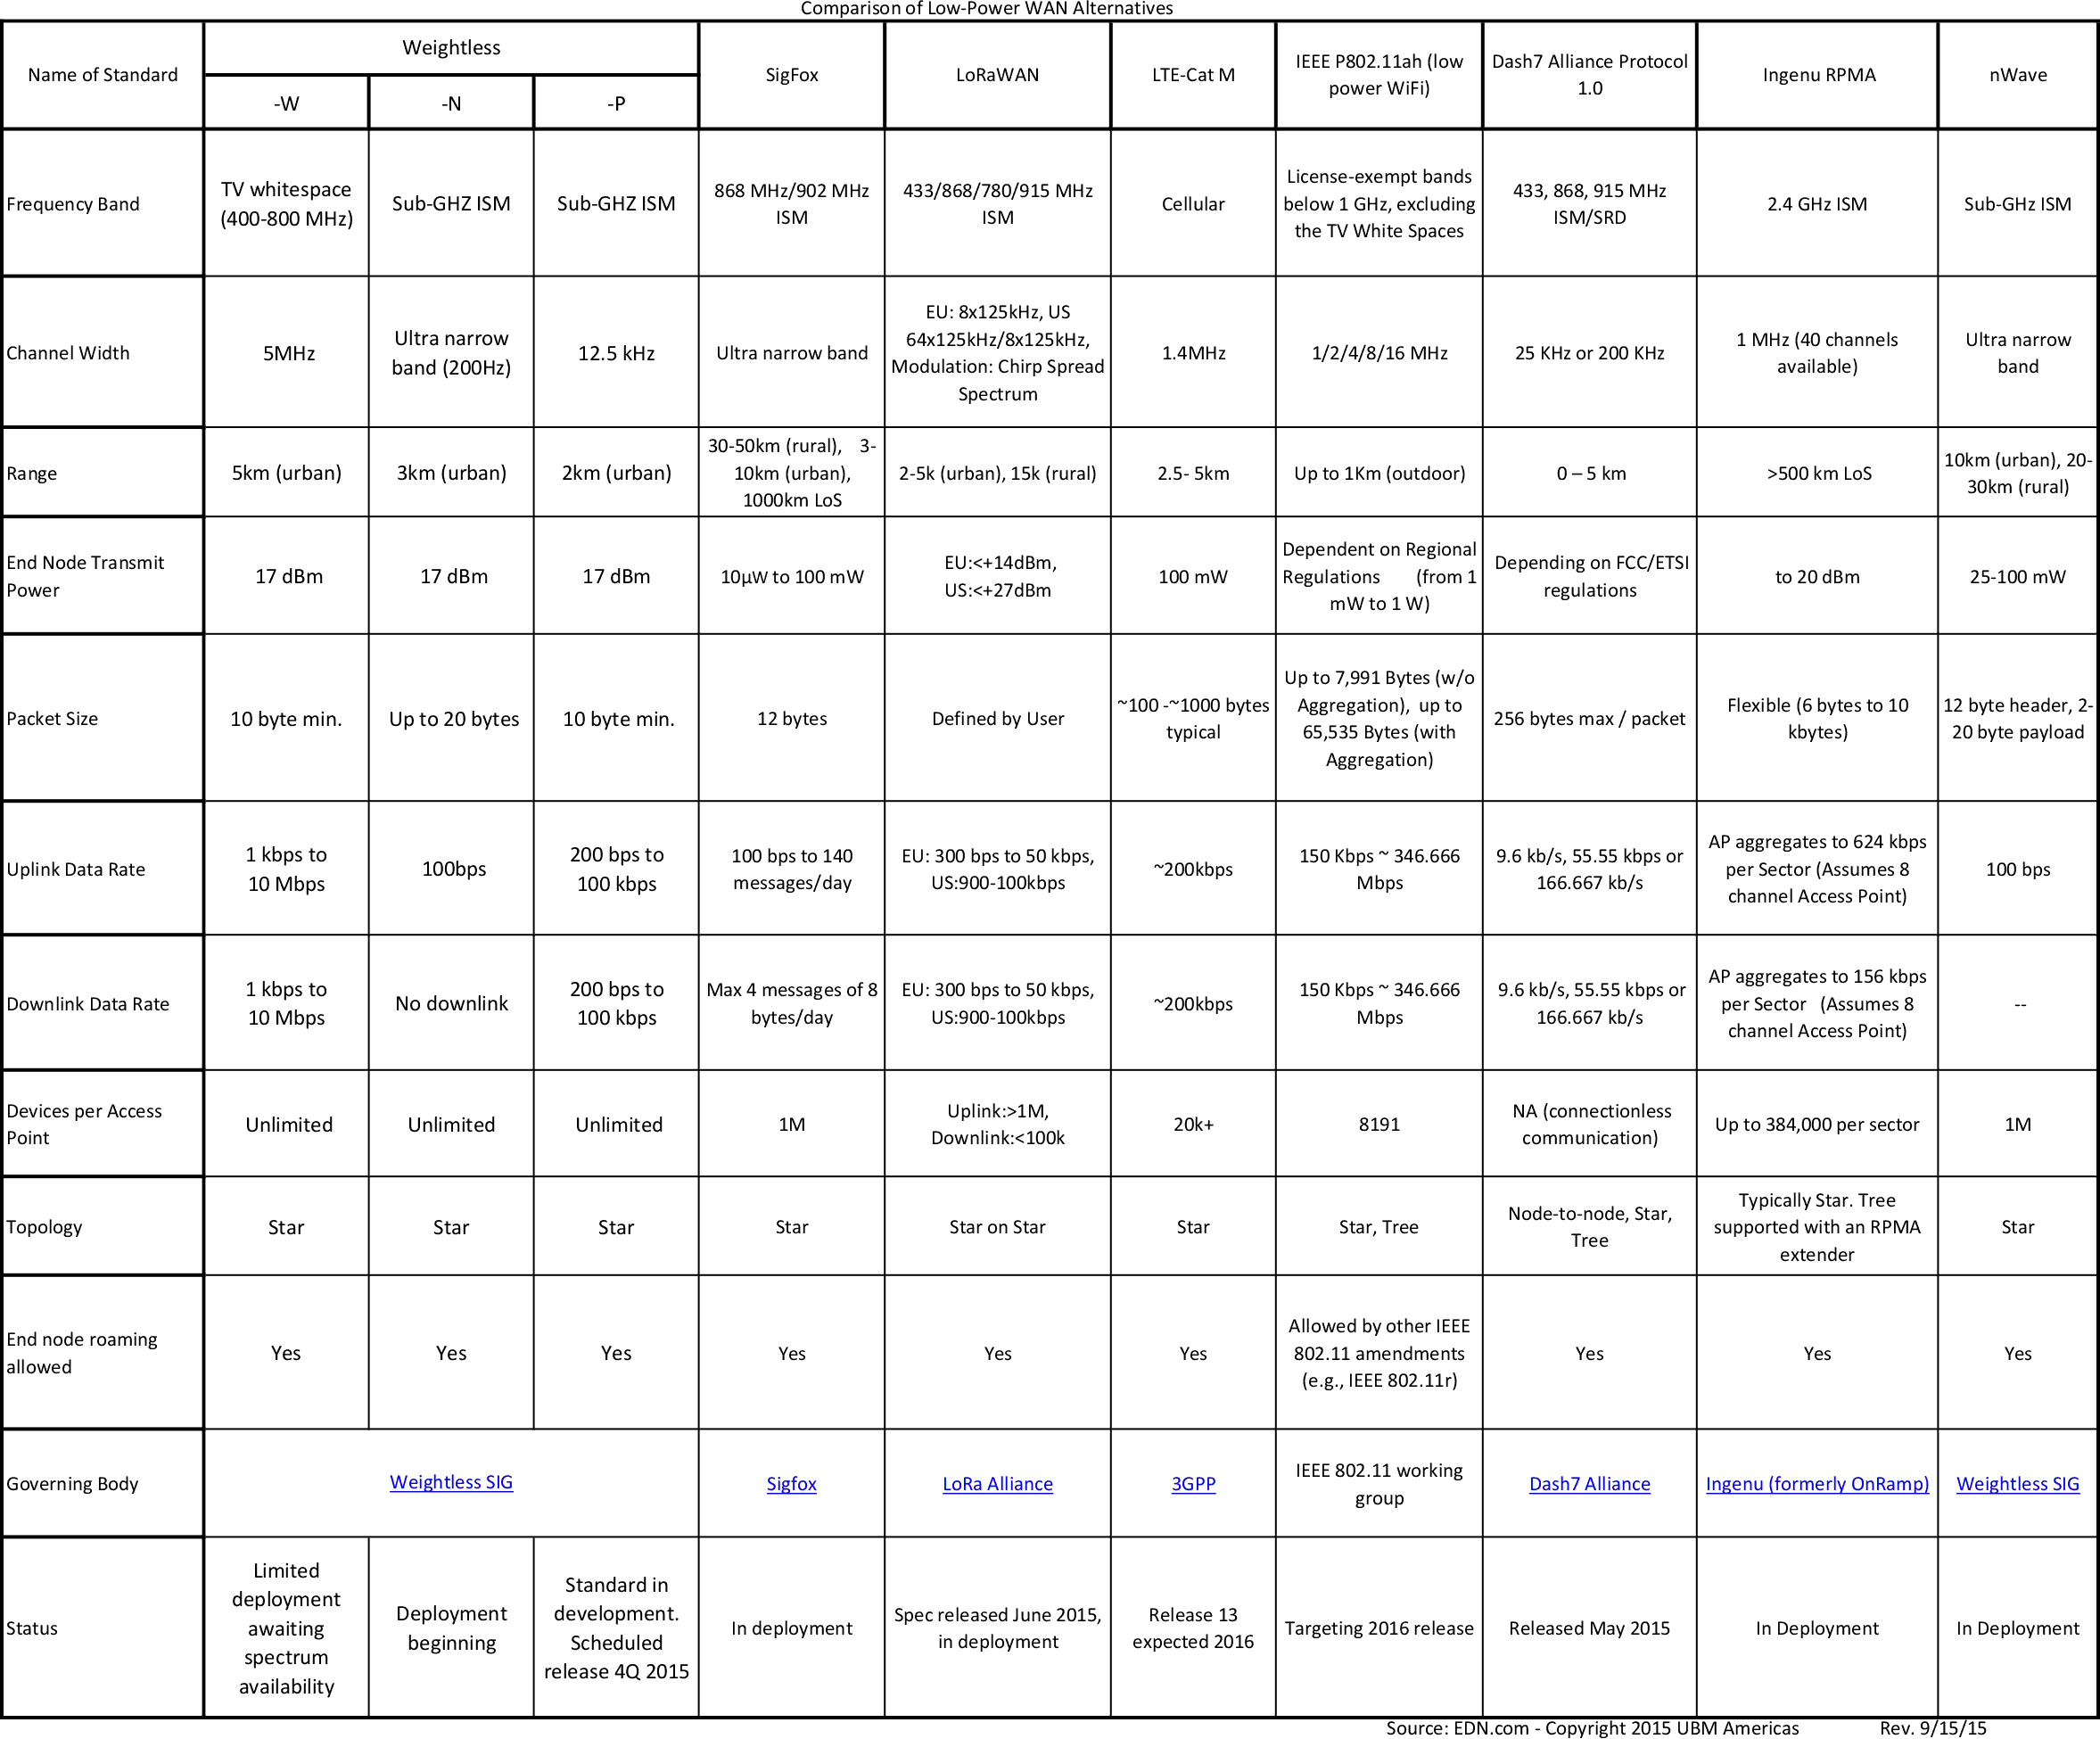 LP-WAn Comparison Table - Click to Enlarge - Source: EDN PDF